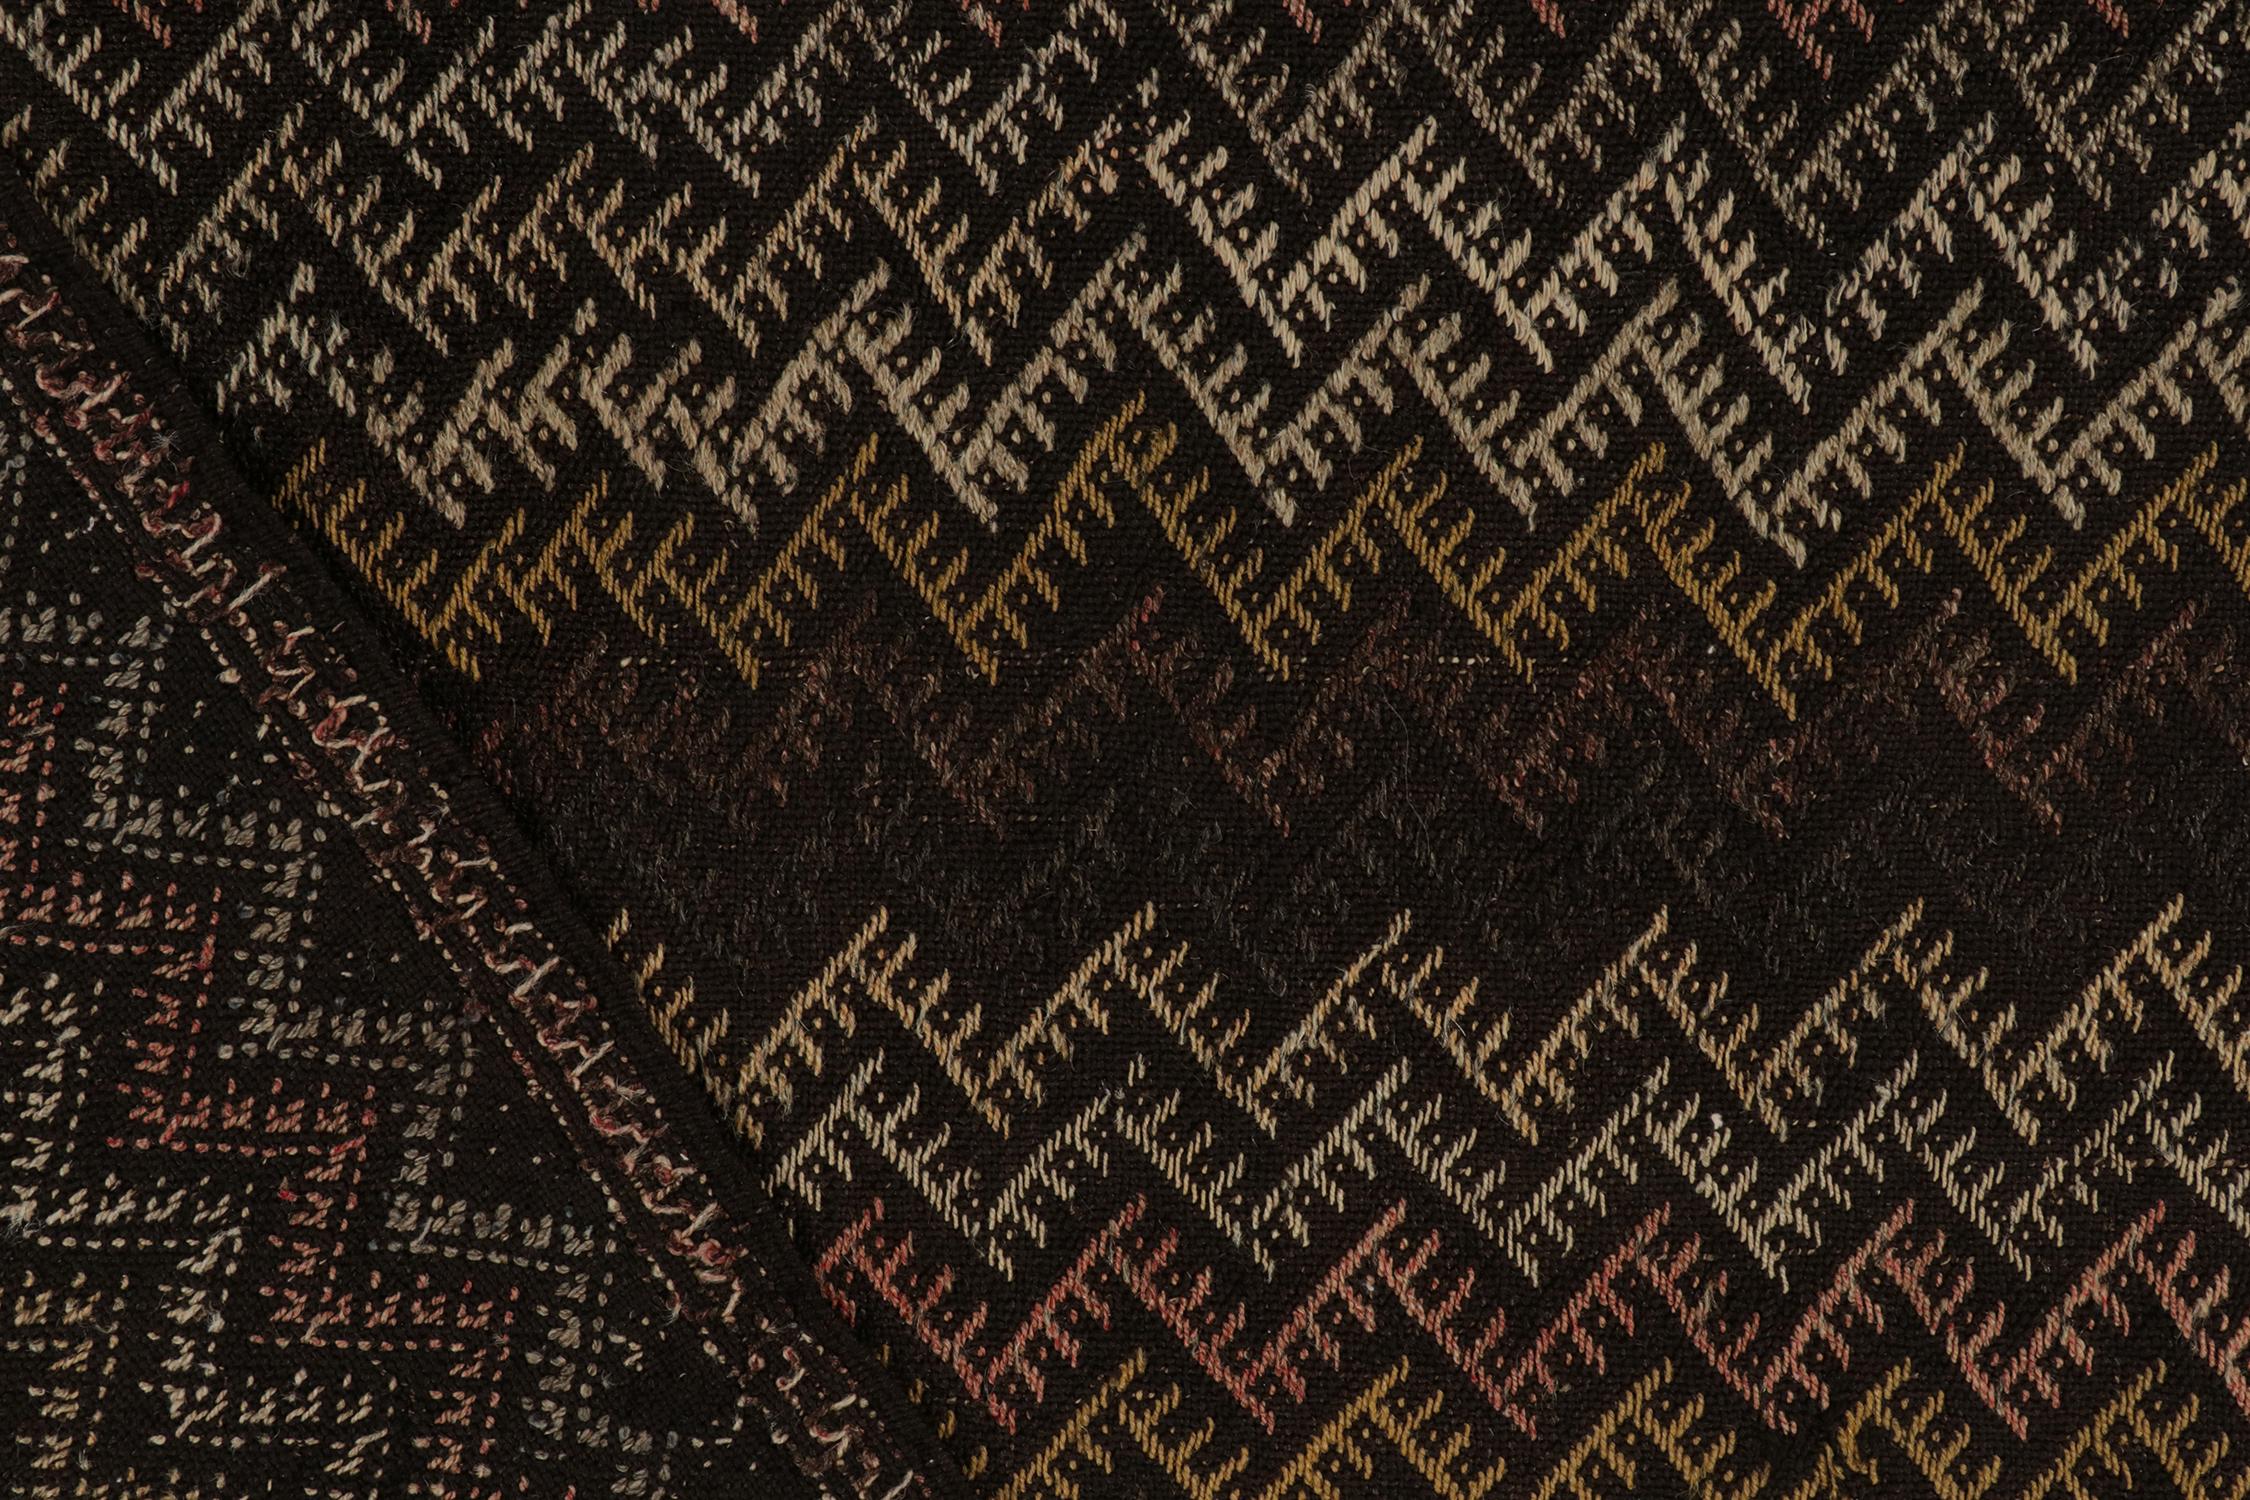 Wool Vintage Chaput Tribal Kilim in Brown and Pink Chevron Patterns by Rug & Kilim For Sale